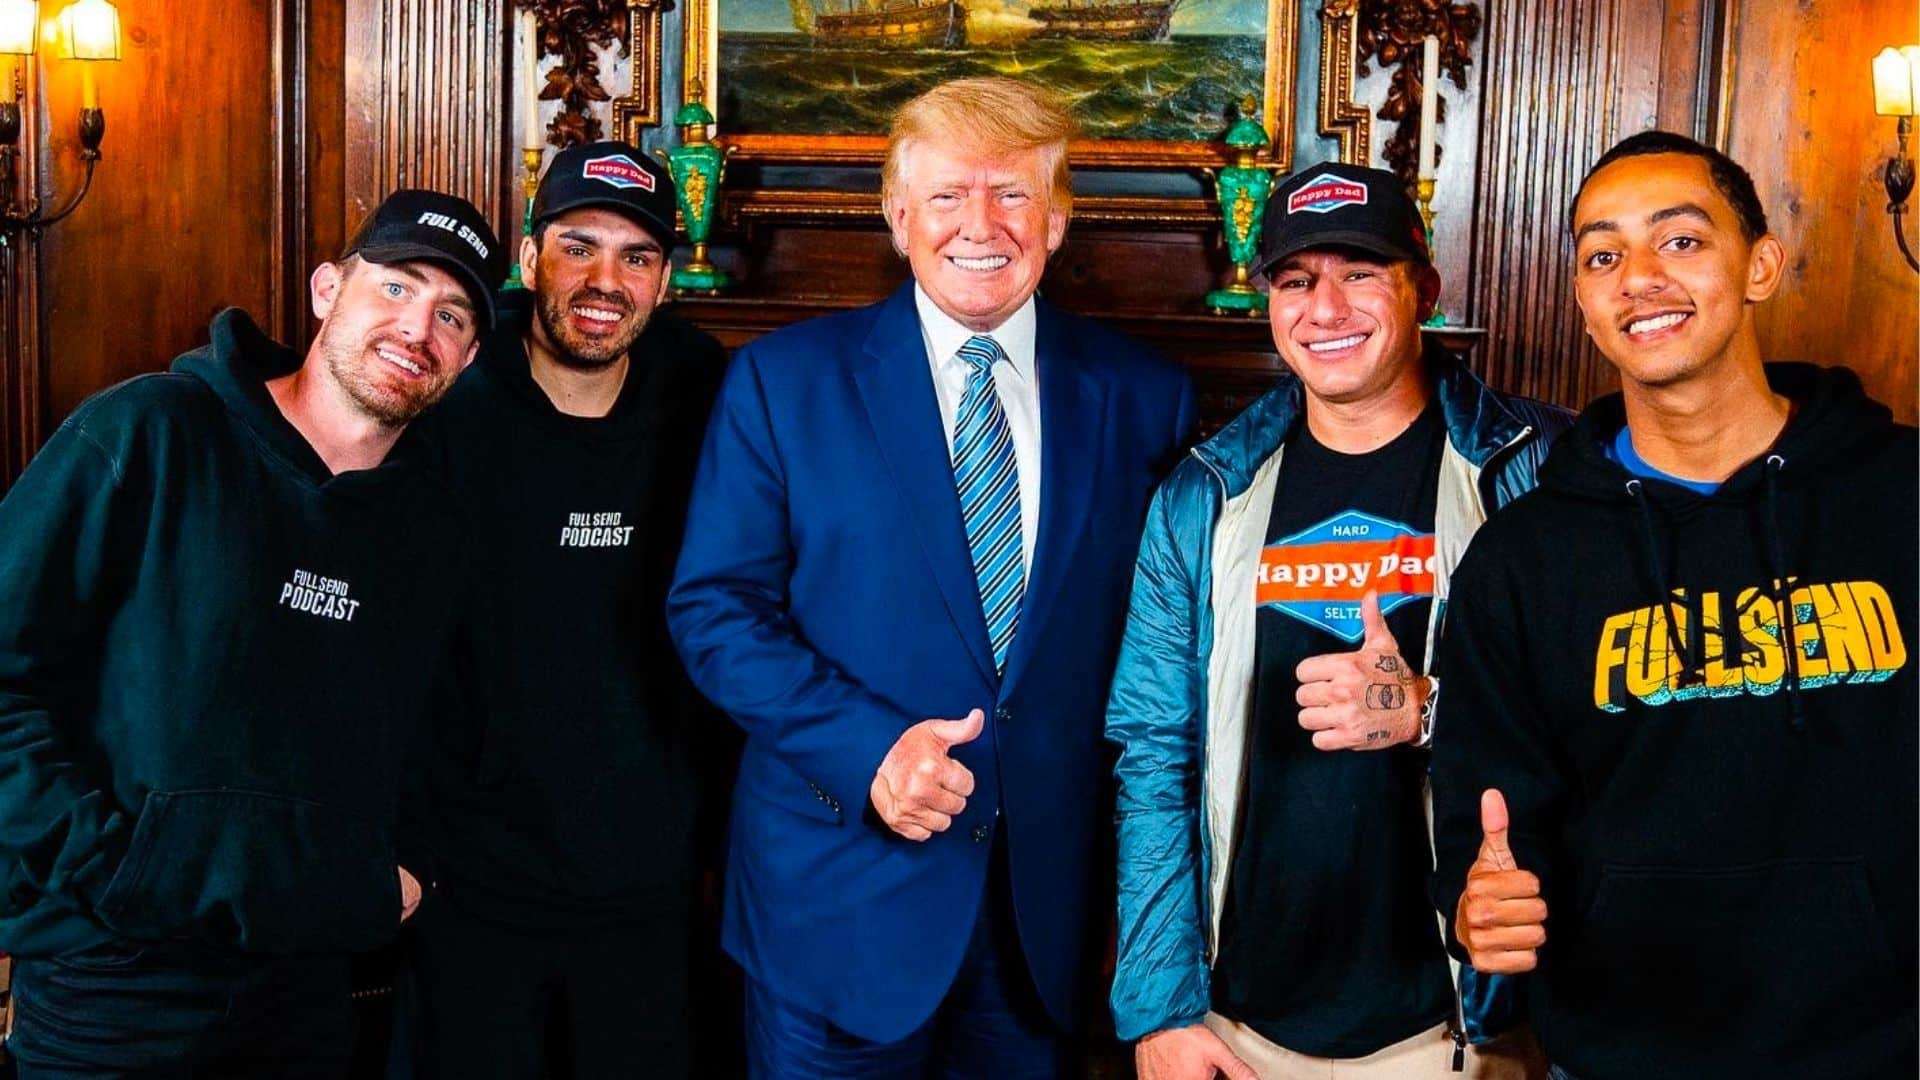 NELK Boys posing with Donald Trump